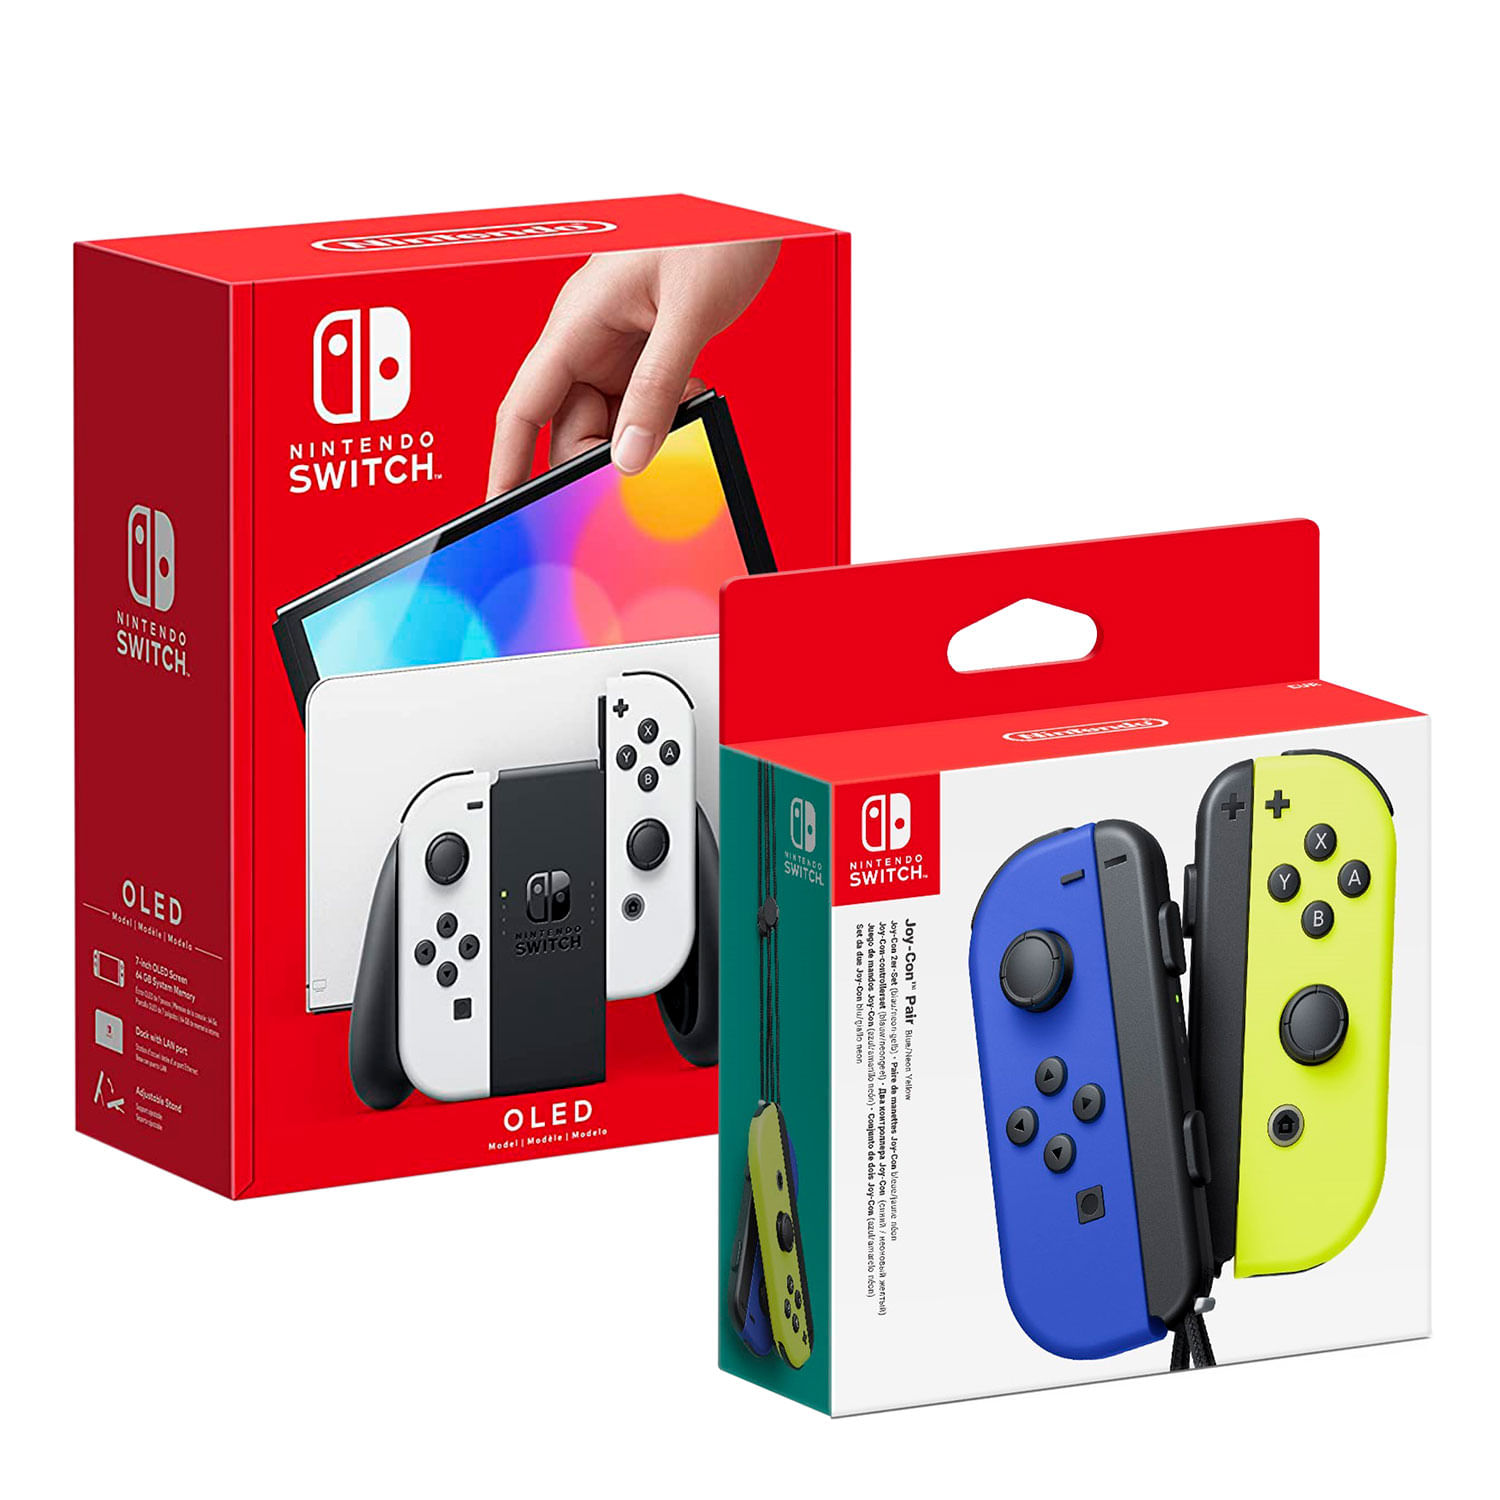 Consola Nintendo Switch Modelo Oled Blanco + Joy Con Azul Amarillo